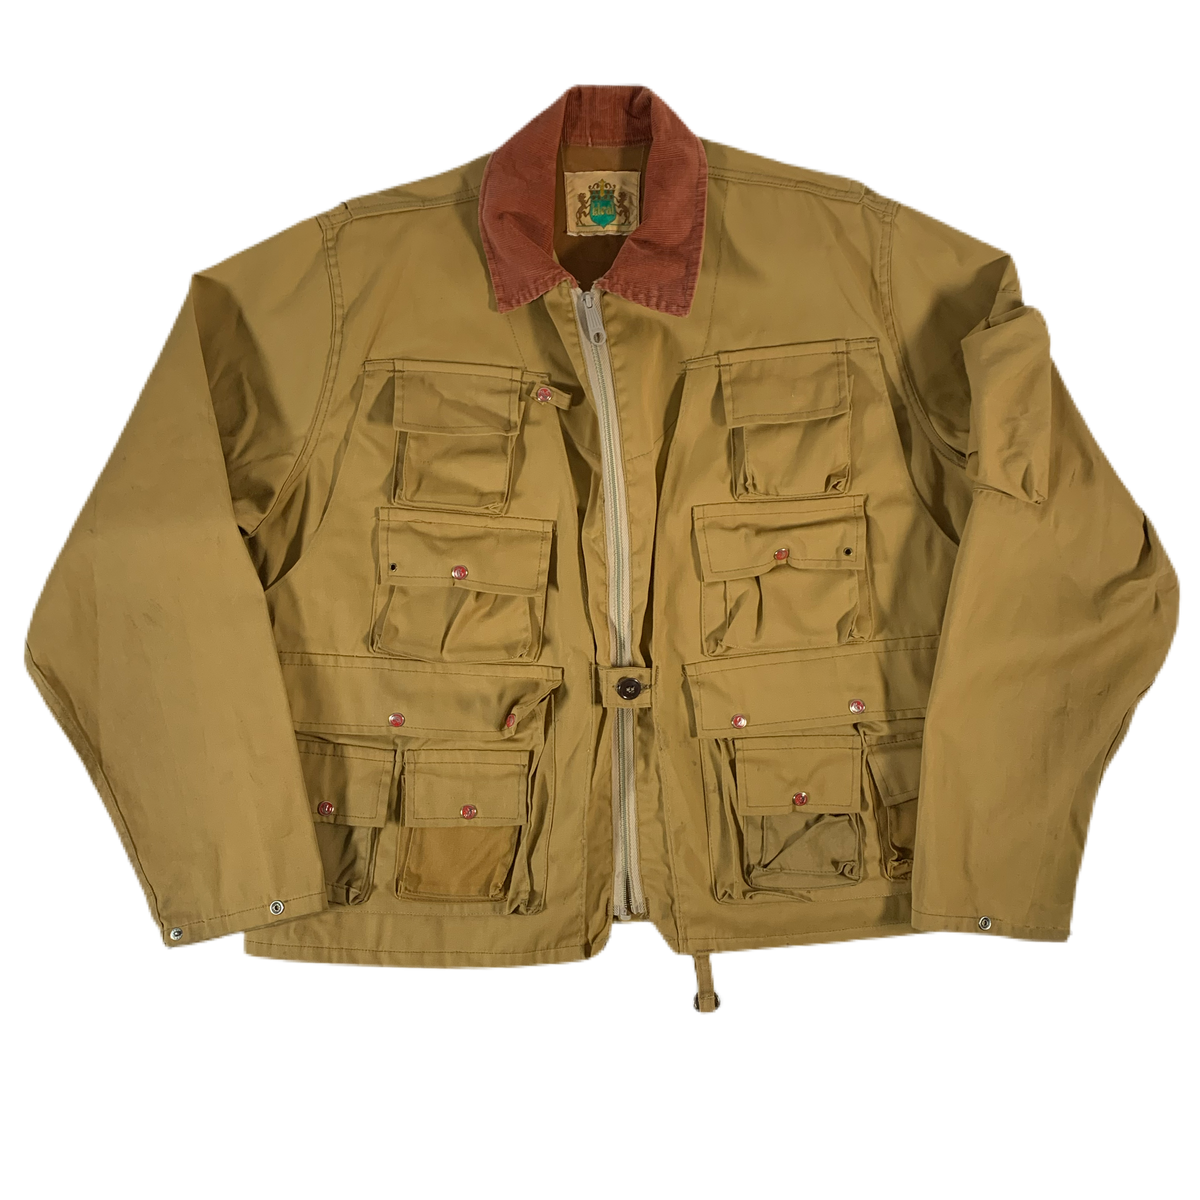 Vintage Ideal “Fly Fishing” Jacket